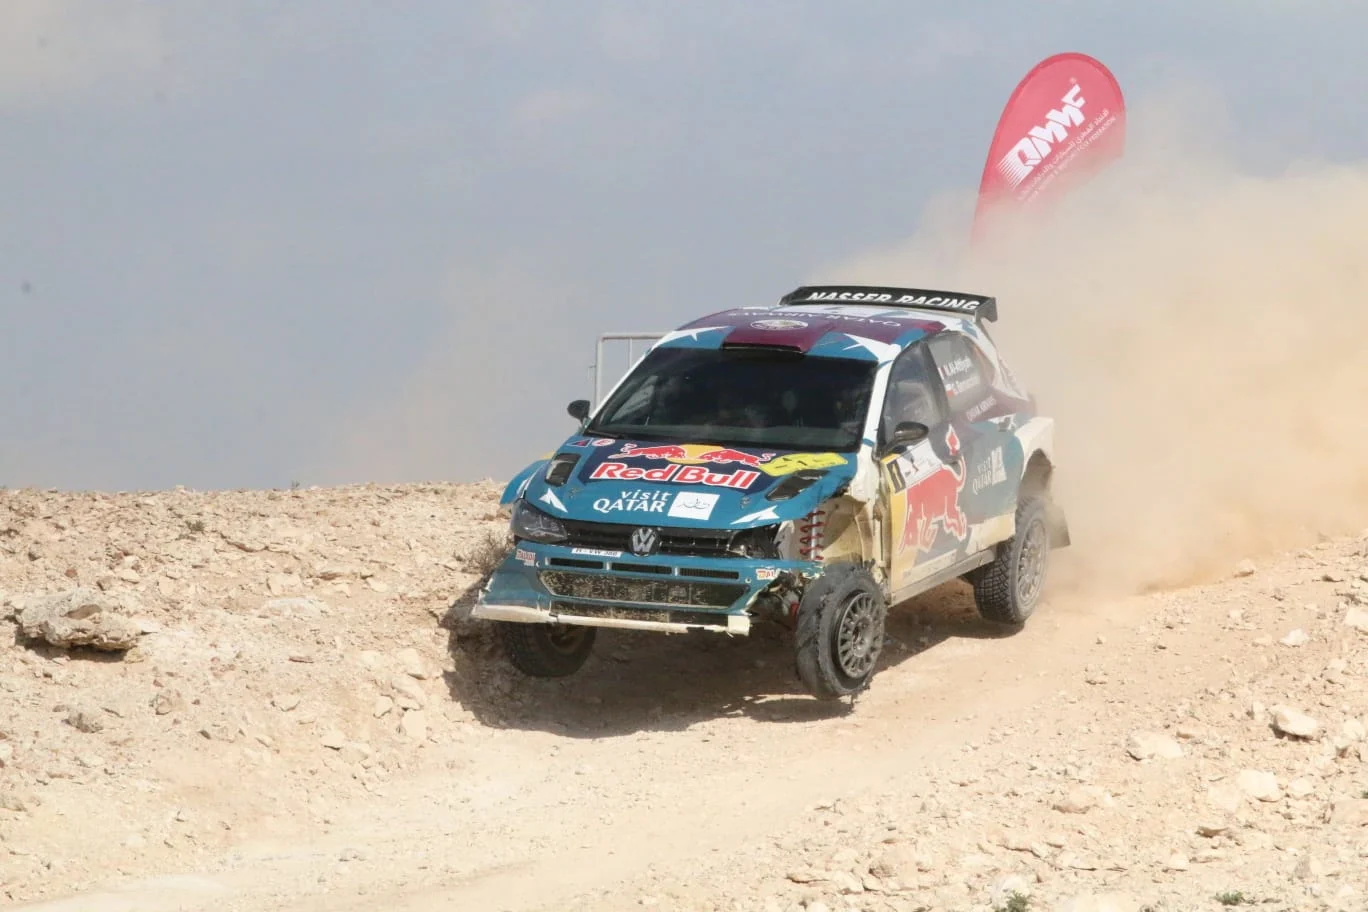 Nasser Al Attiyah Leads Qatar International Rally Standings